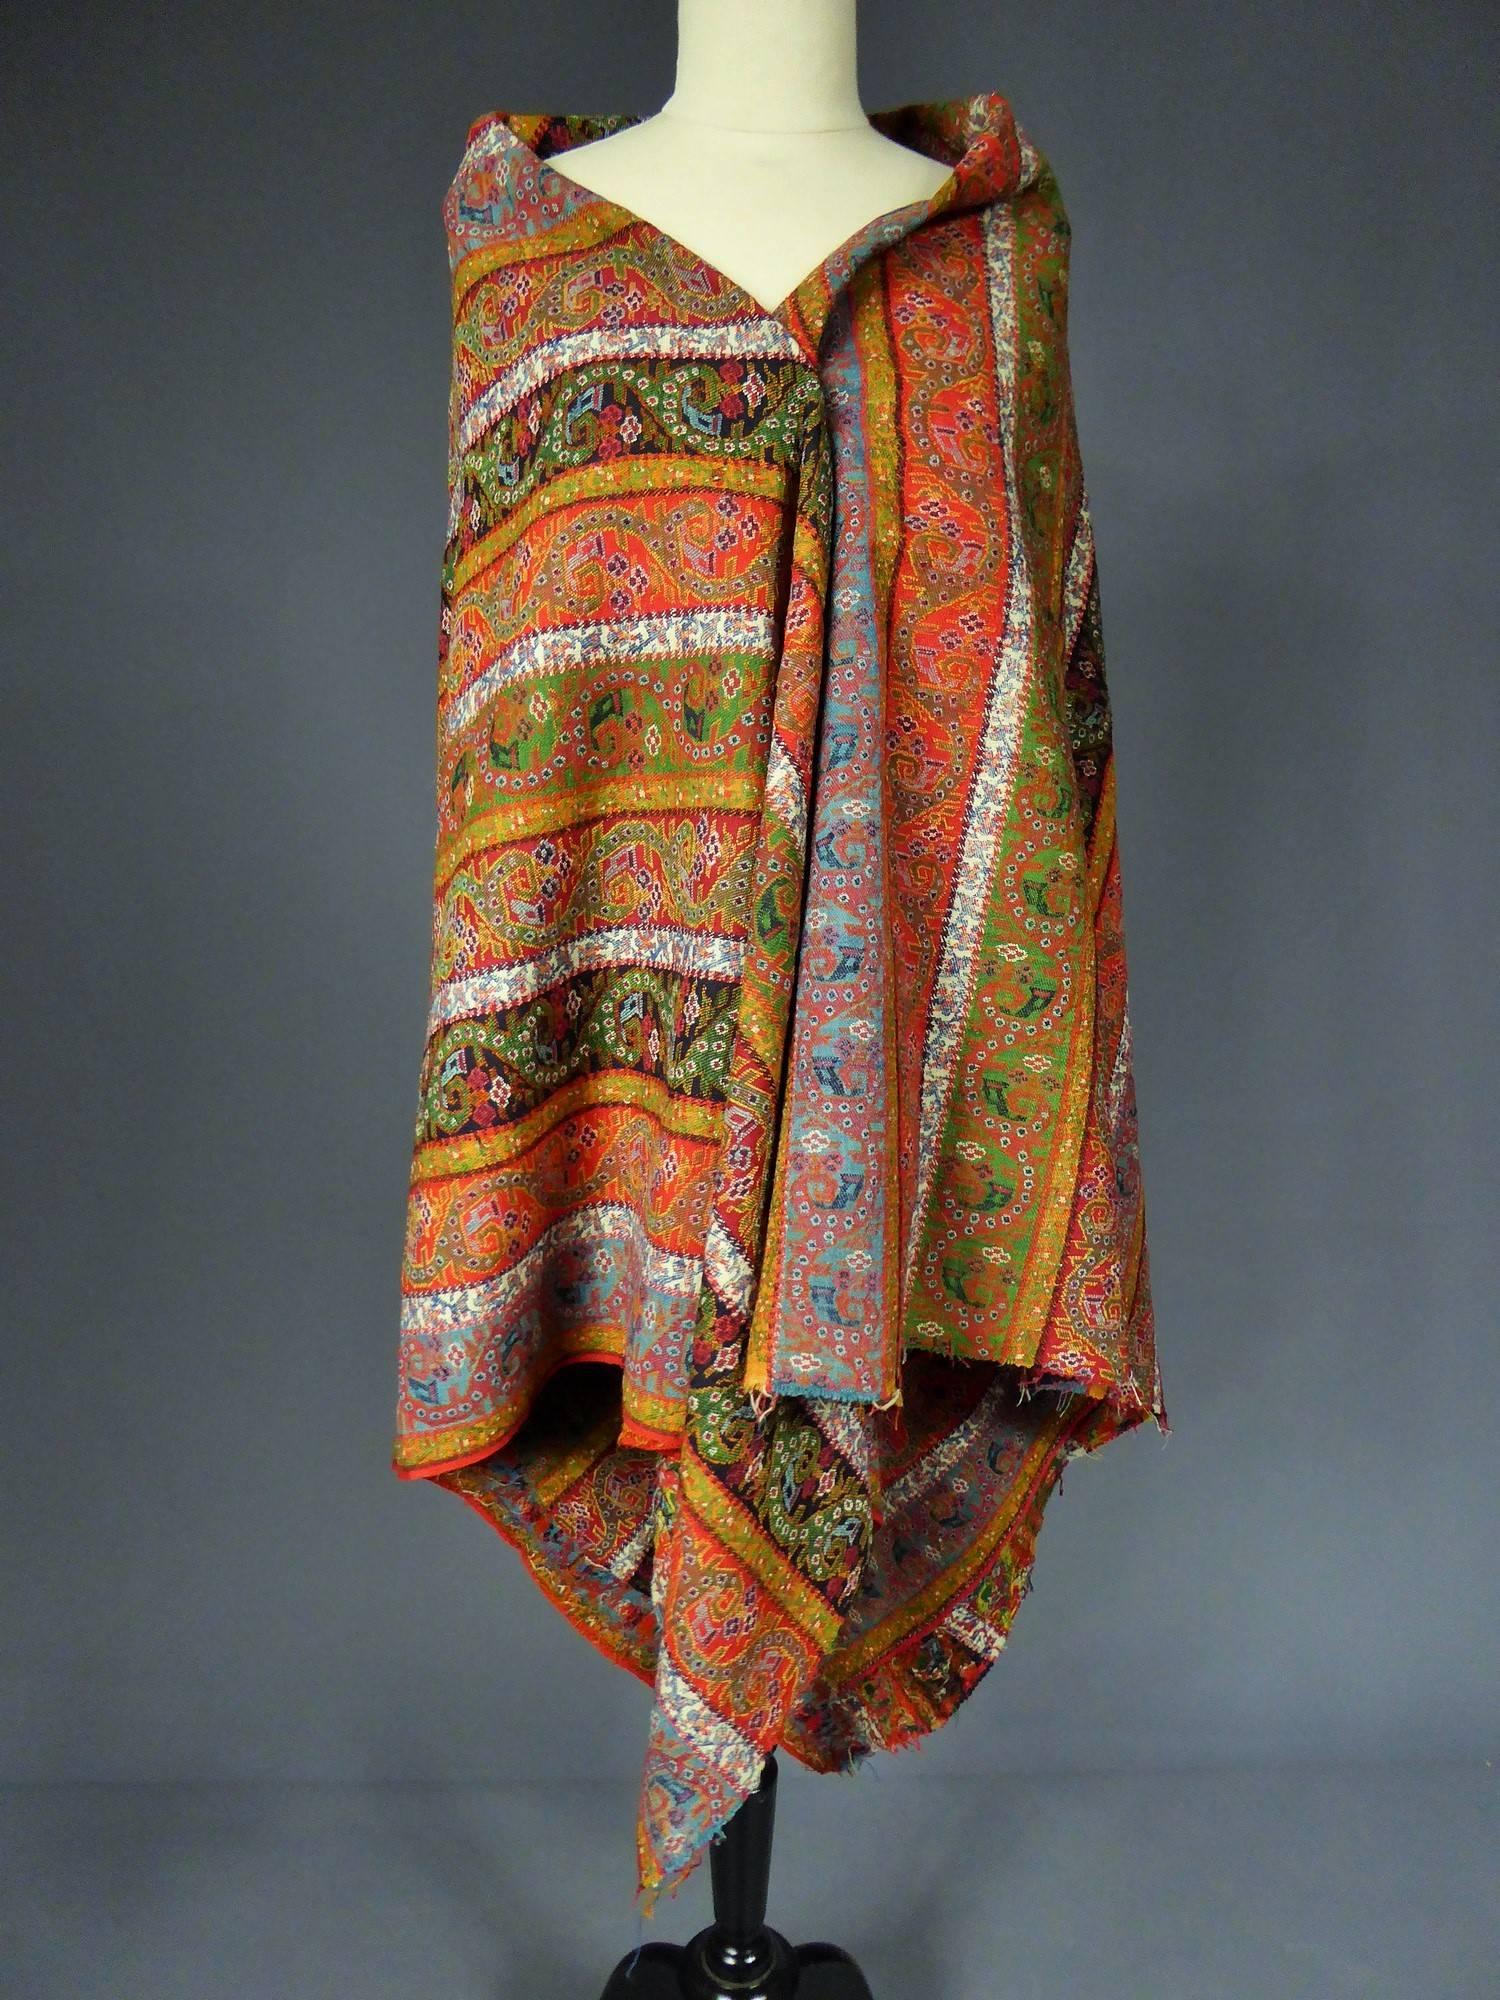 Twill weave striped kashmir shawl  - India or Persia 19th century 5